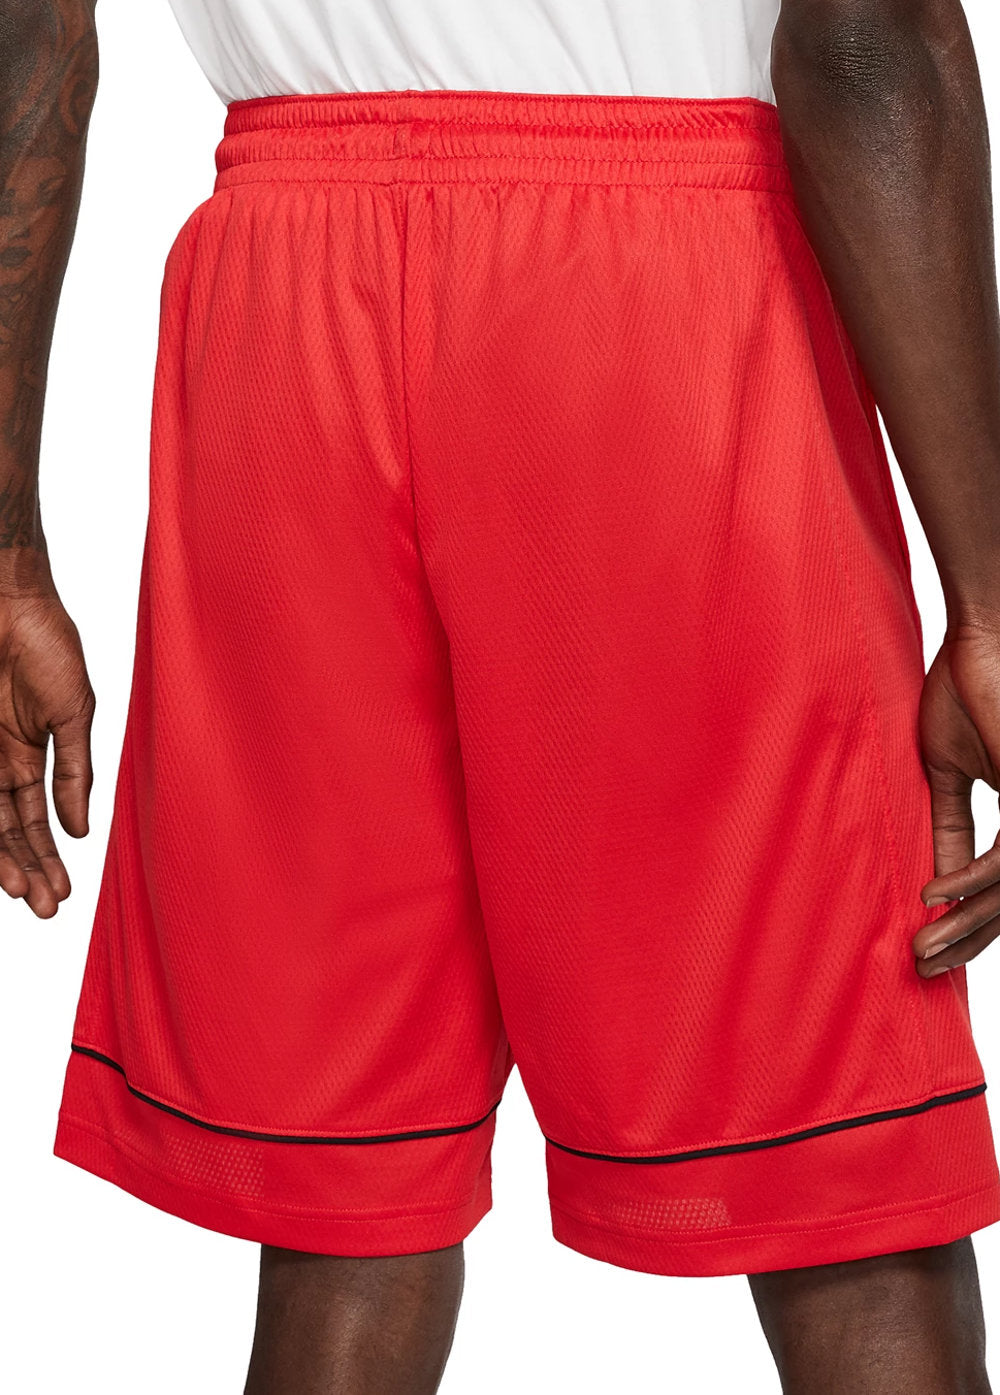 Nike Mens Fastbreak Dri fit Basketball Shorts